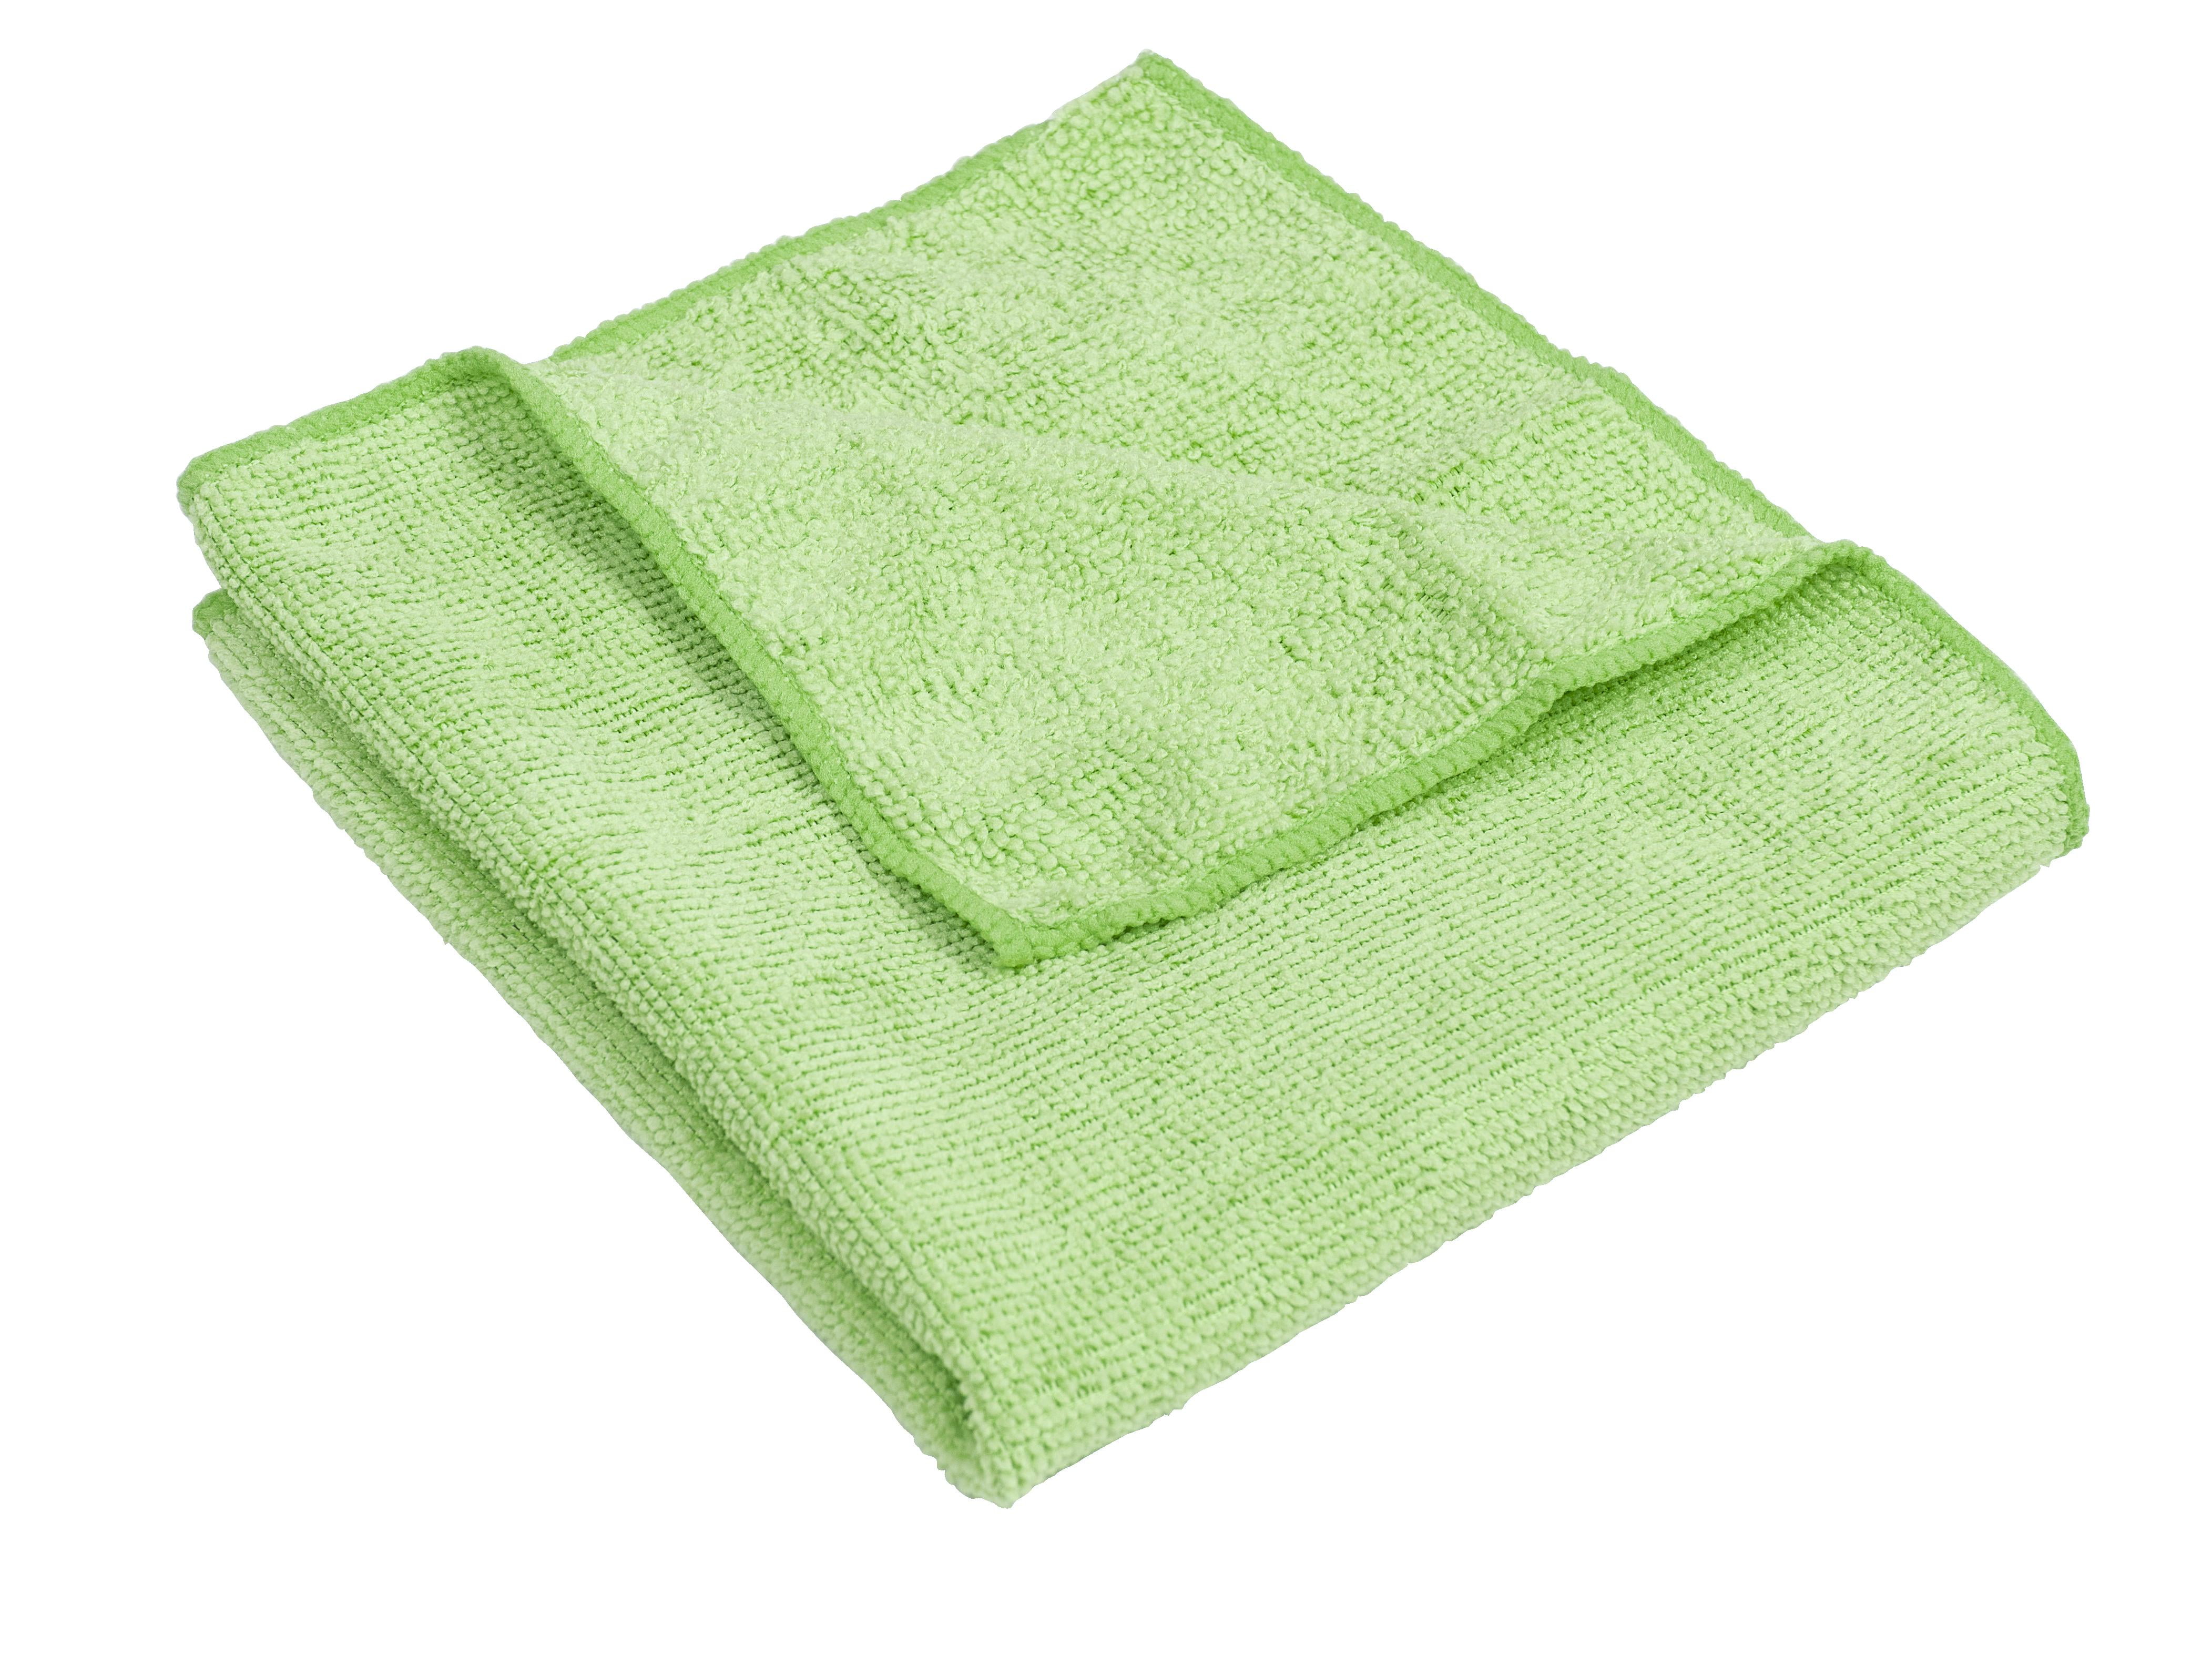 kimteny Cleaning Cloths Kitchen Towels Microfiber Washcloths Lint